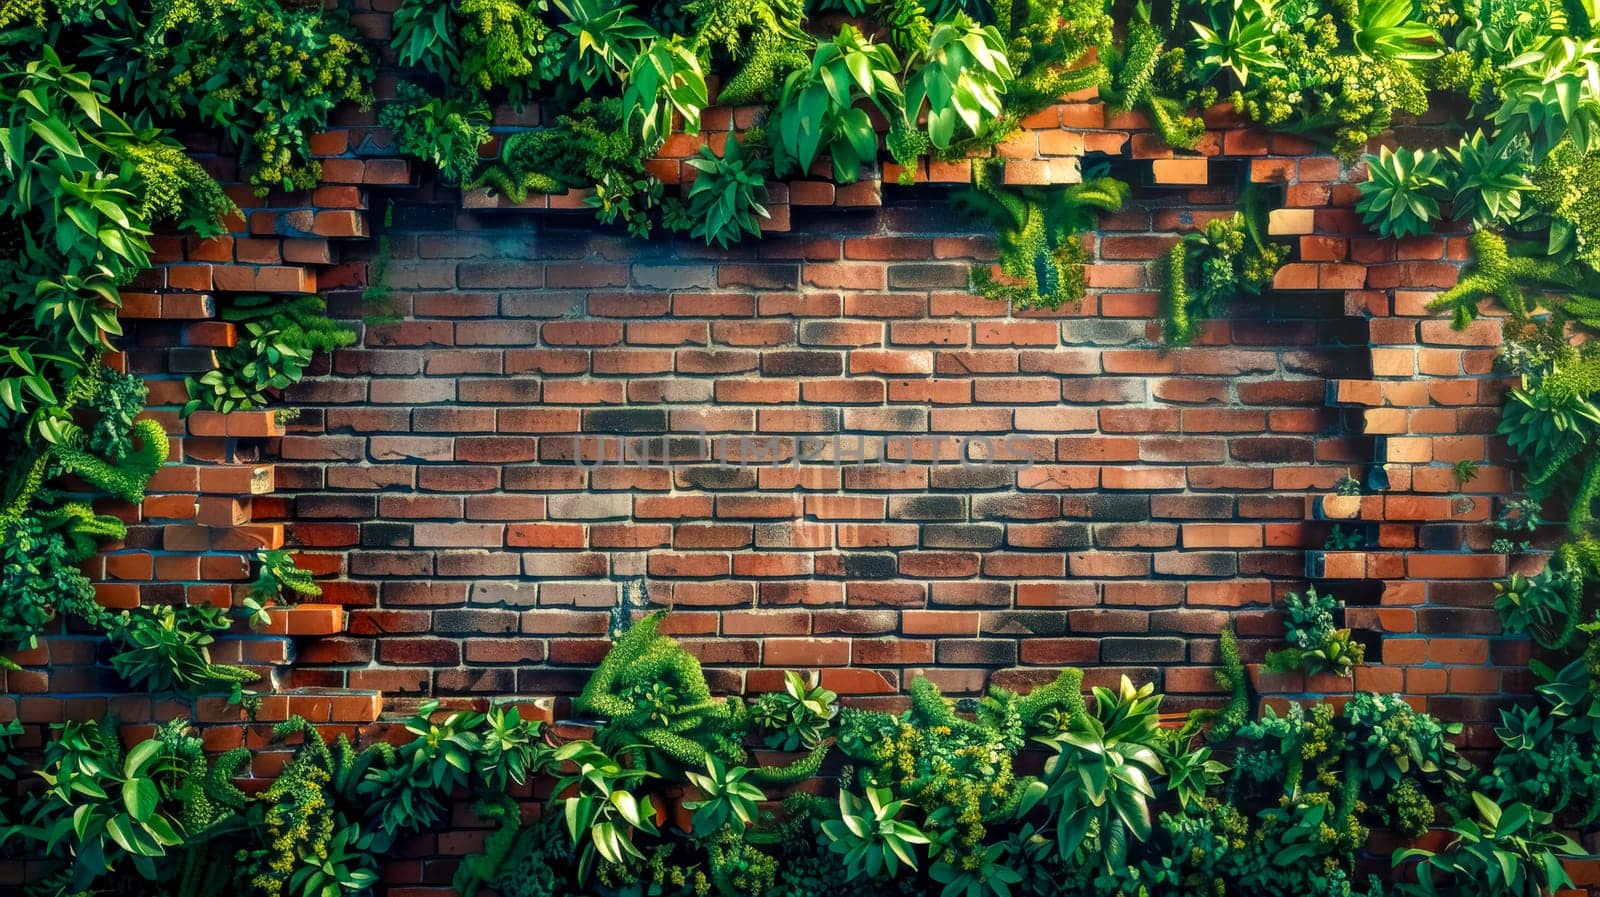 Green urban oasis - verdant plants on brick wall by Edophoto